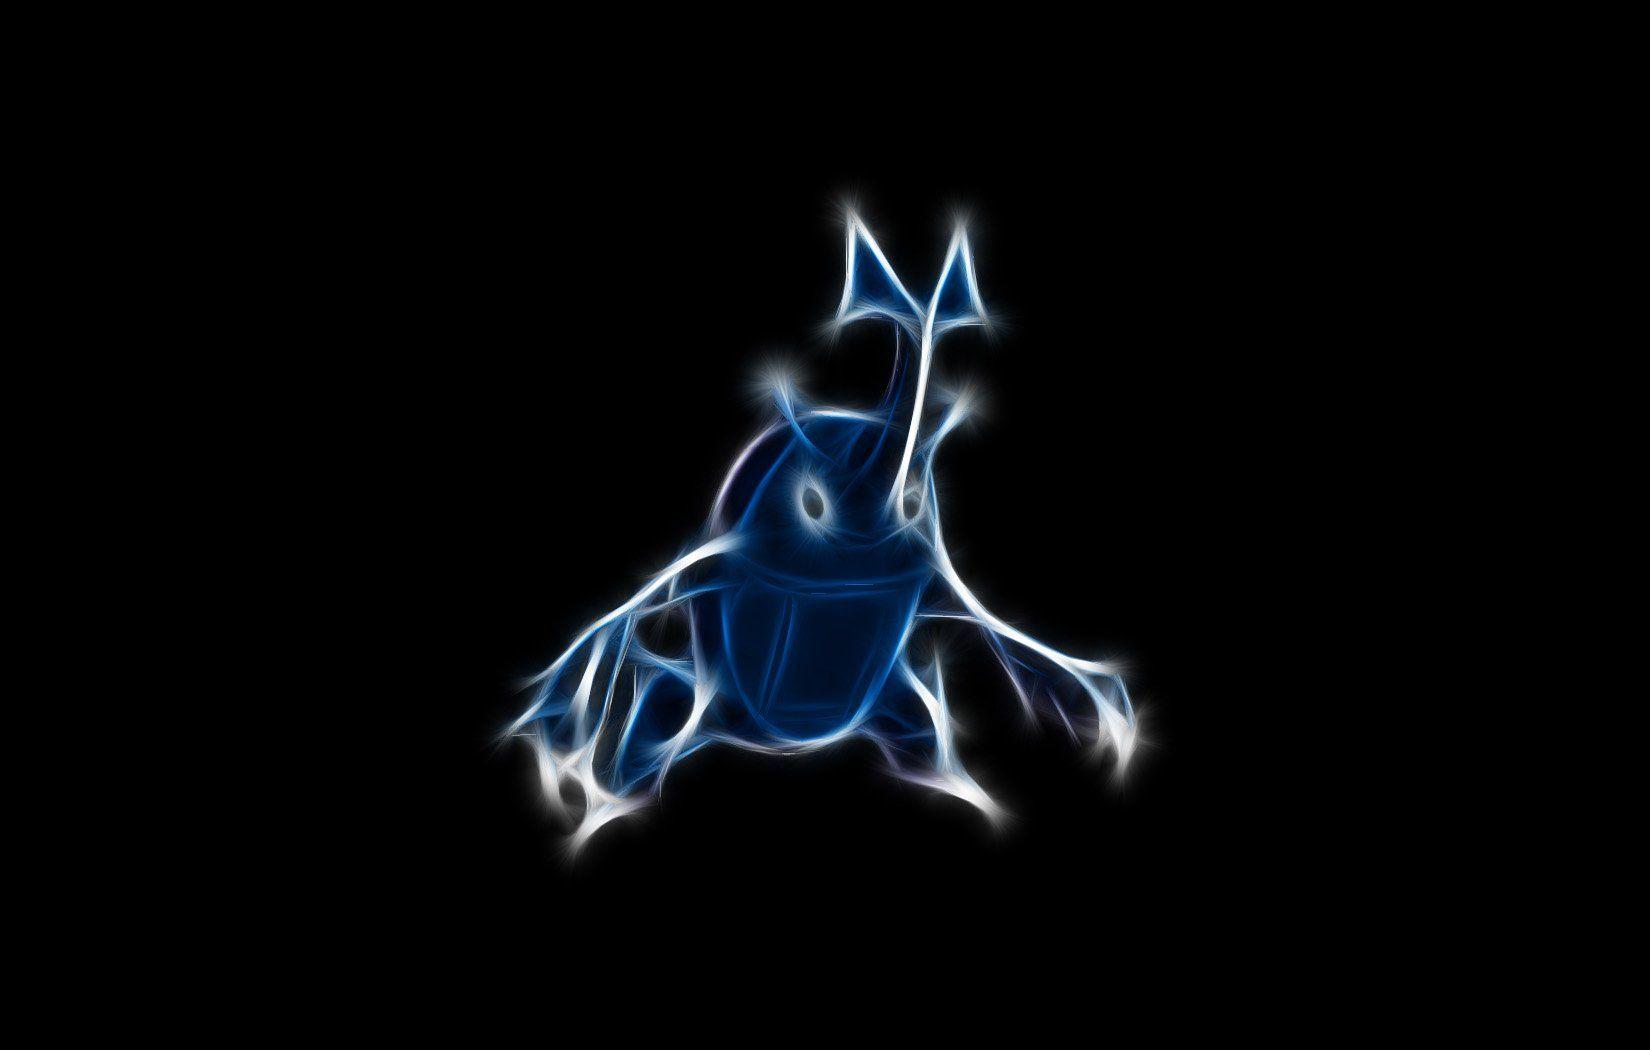 Heracross (Pokémon) HD Wallpaper and Background Image